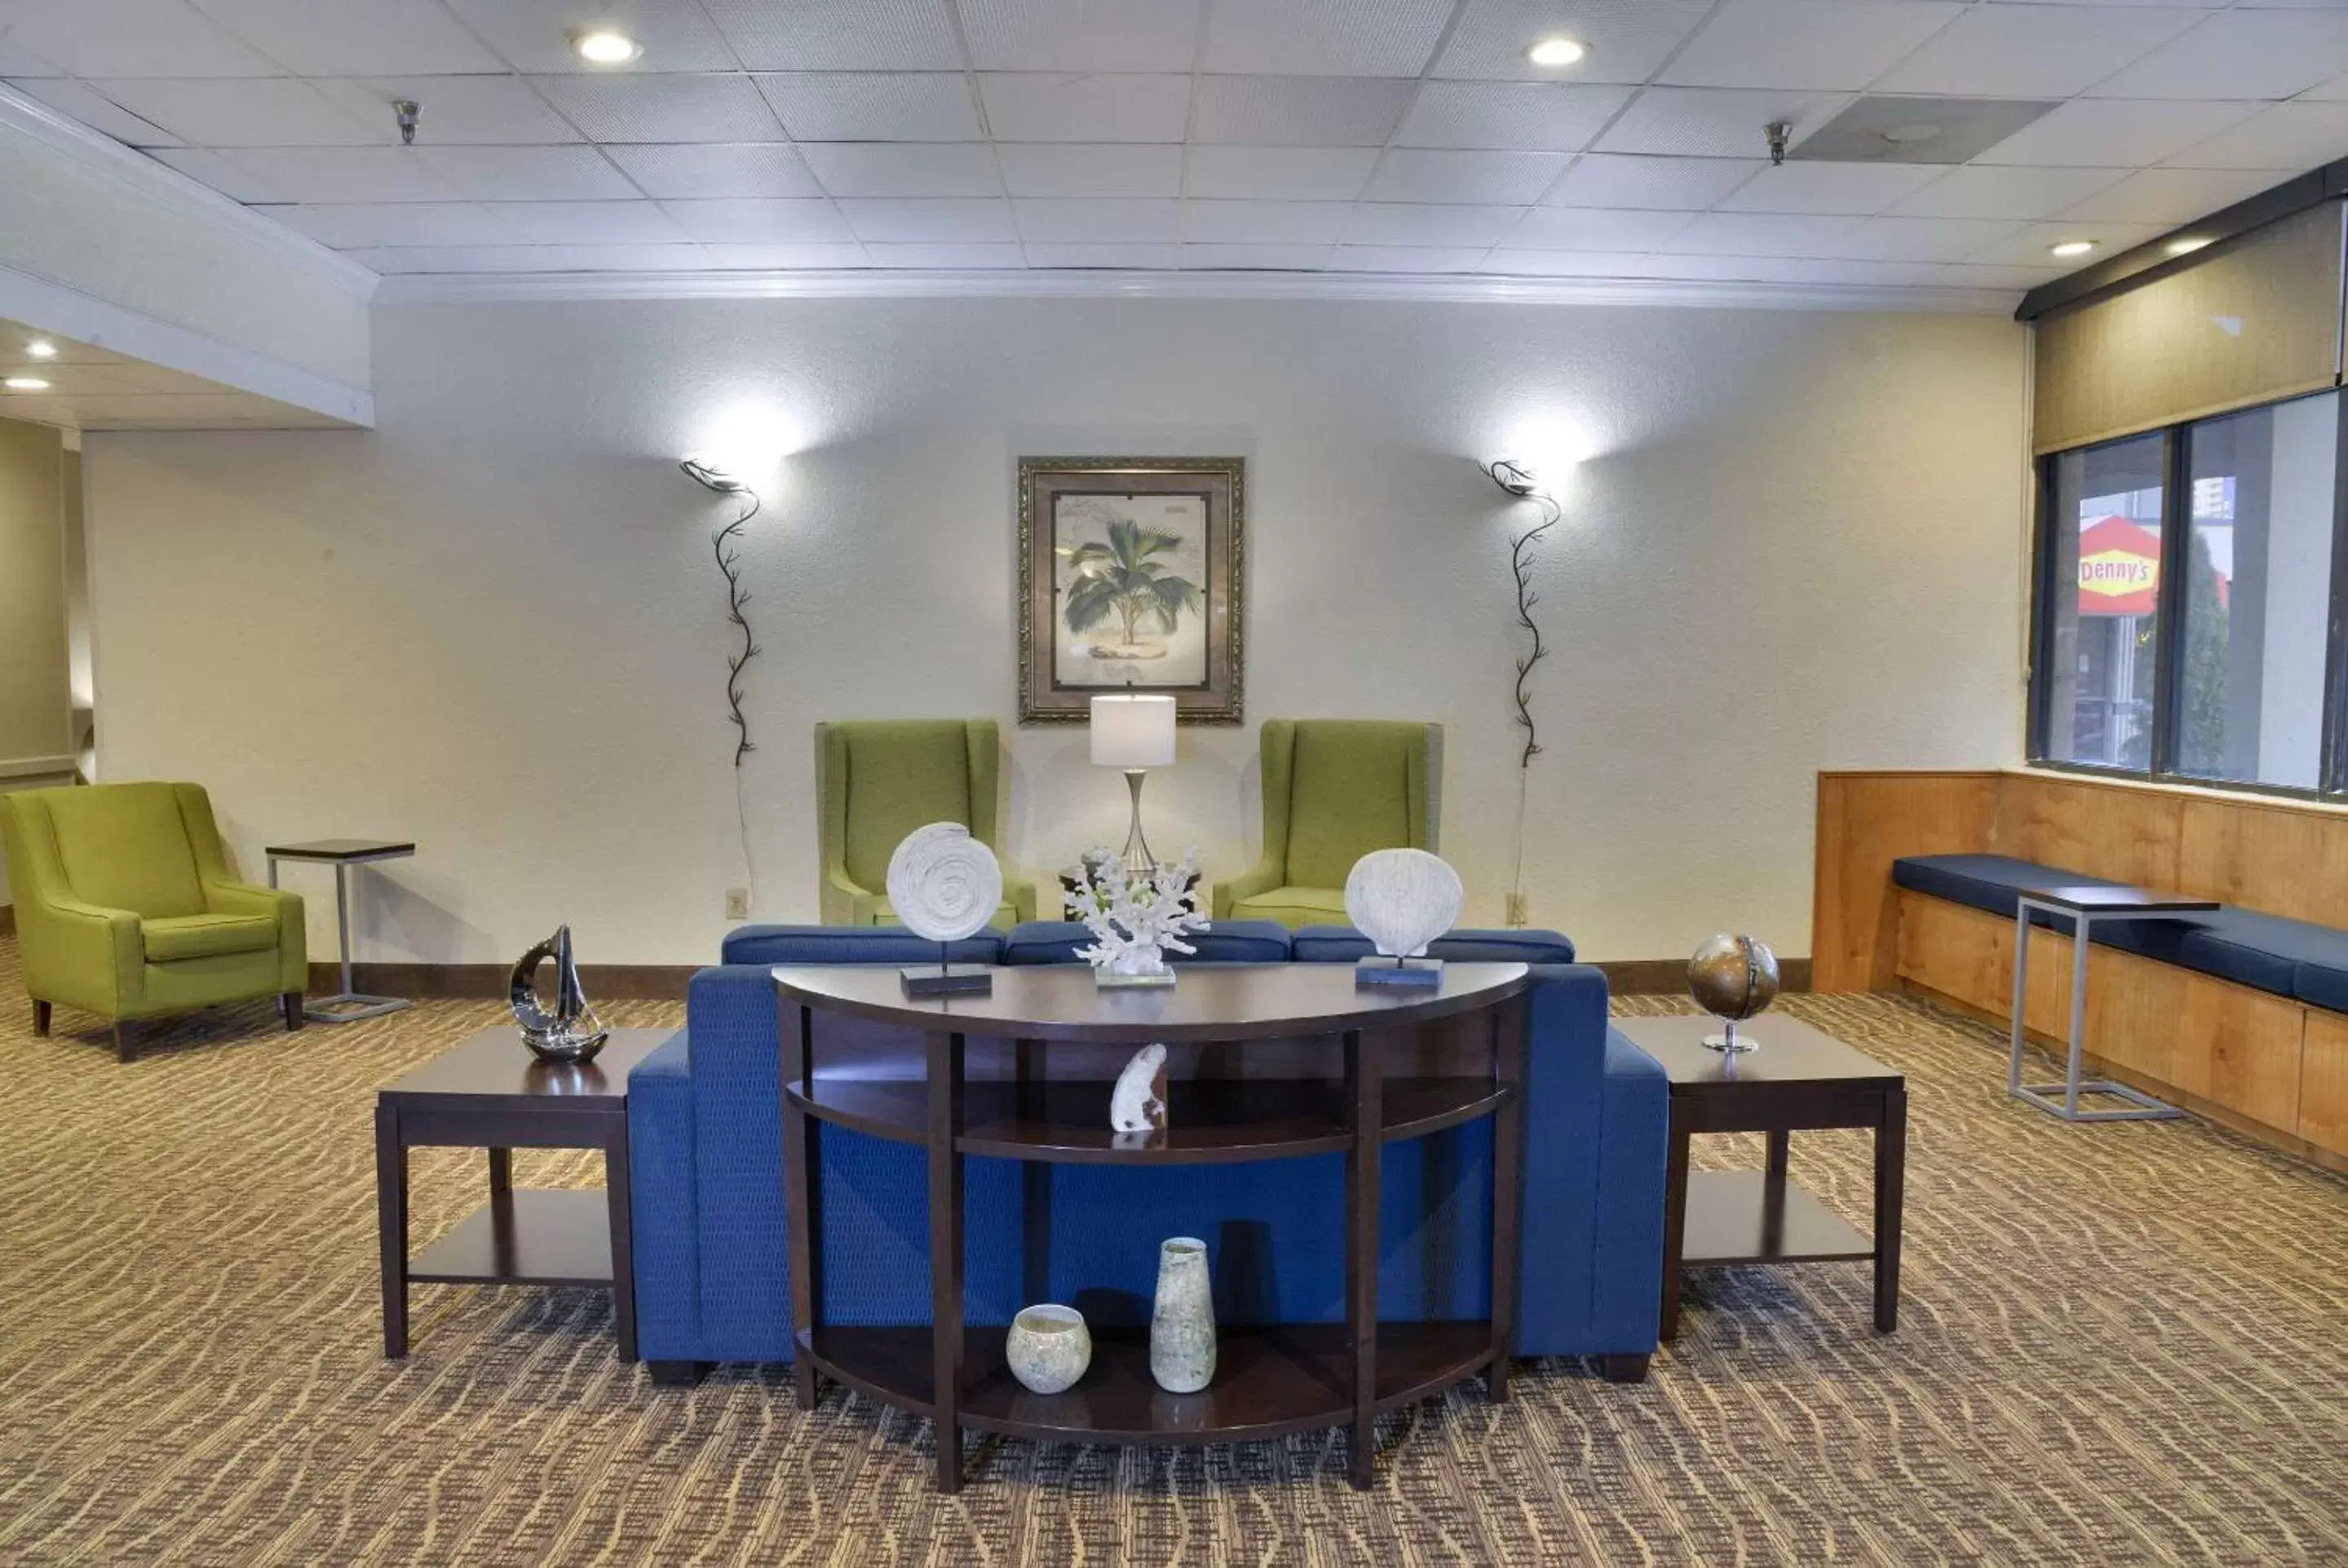 Lobby or reception in Comfort Inn Gold Coast